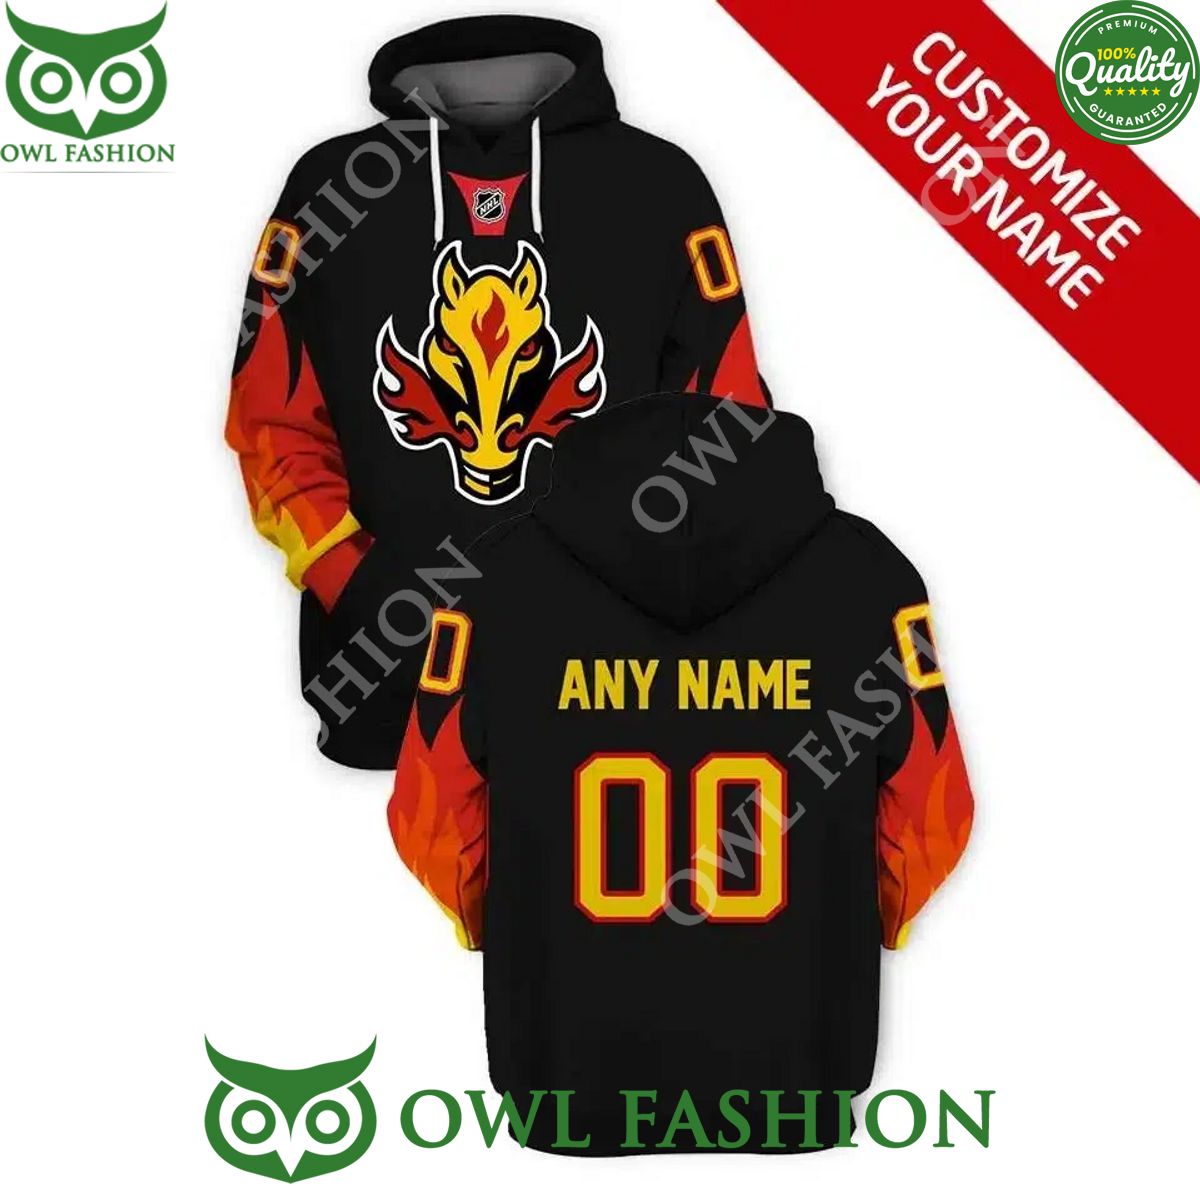 The Calgary Flames Ice Hockey team printed custom name and number hoodie